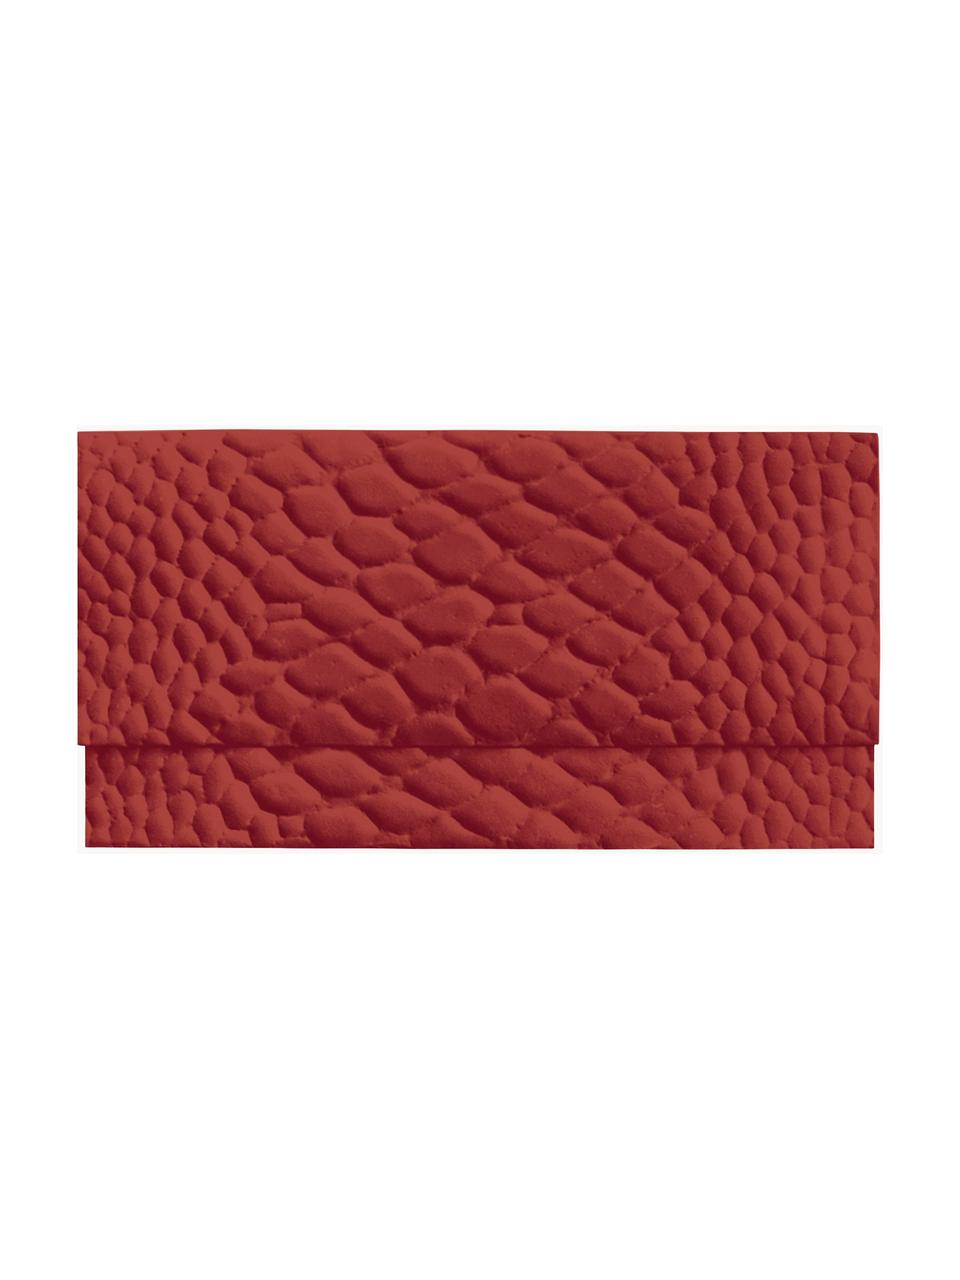 Obal Snake, Papier, Červená, Š 23 x V 12 cm